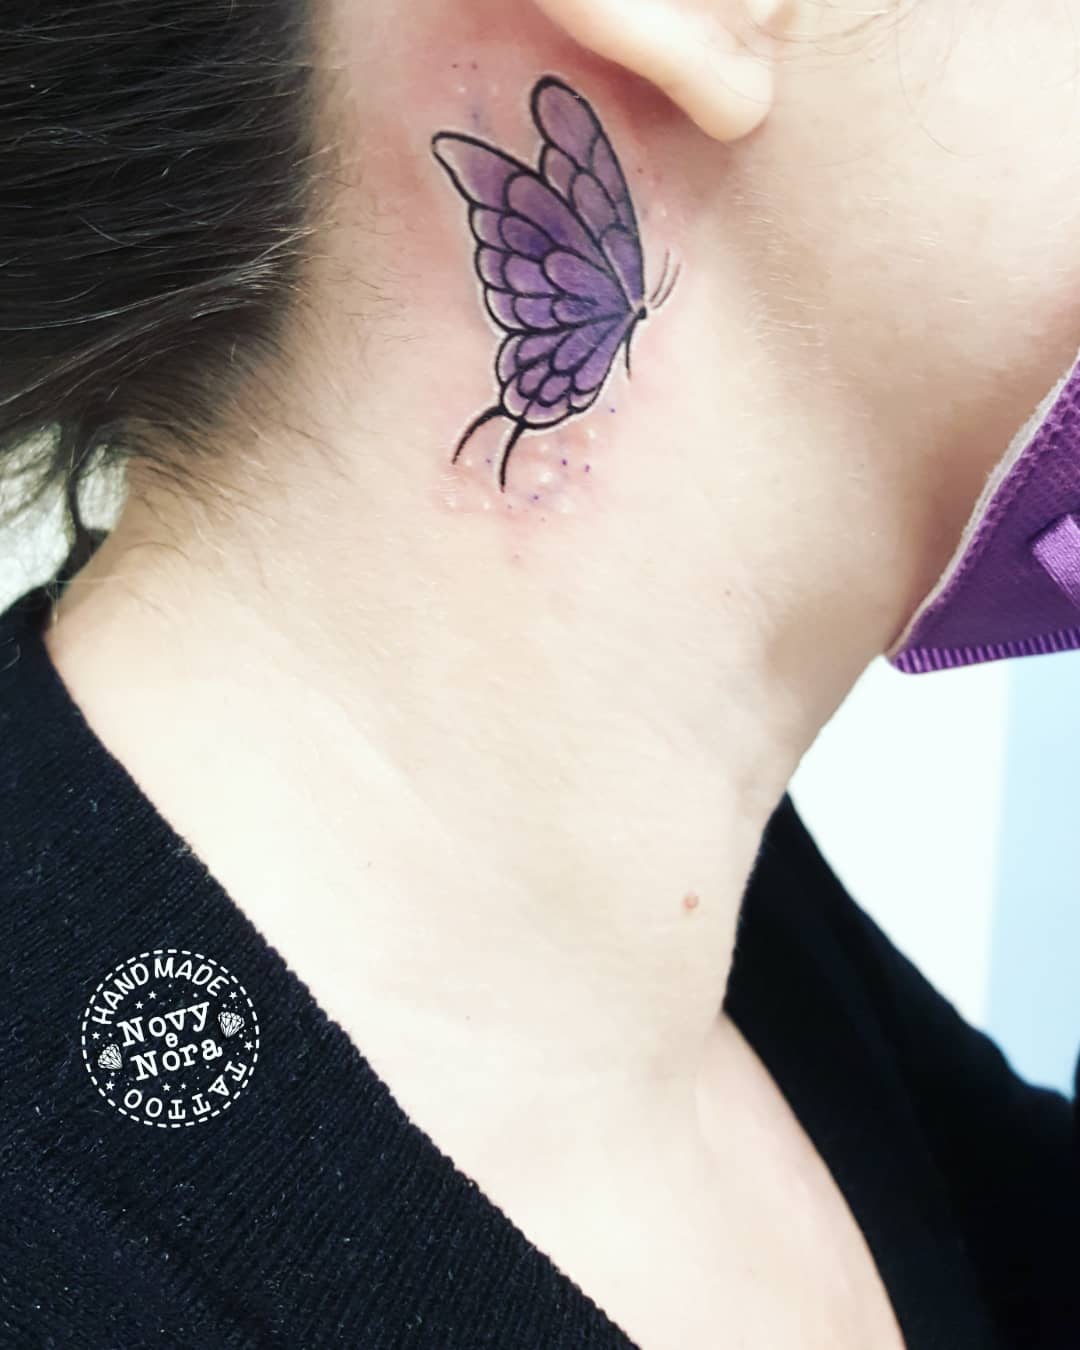 Big Purple Butterfly Tattoo Behind Ear